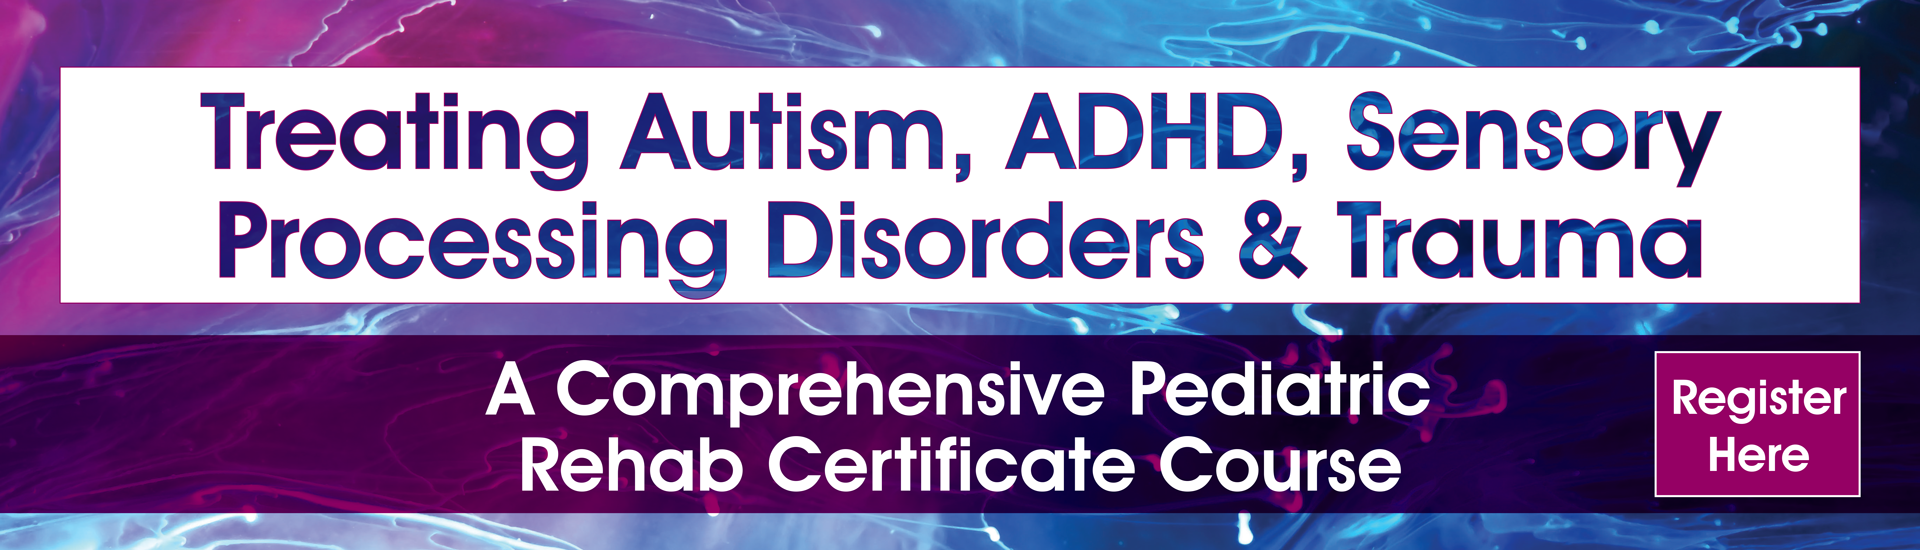 Treating Autism, ADHD, Sensory Processing Disorders & Trauma: A Comprehensive Pediatric Rehab Certificate Course